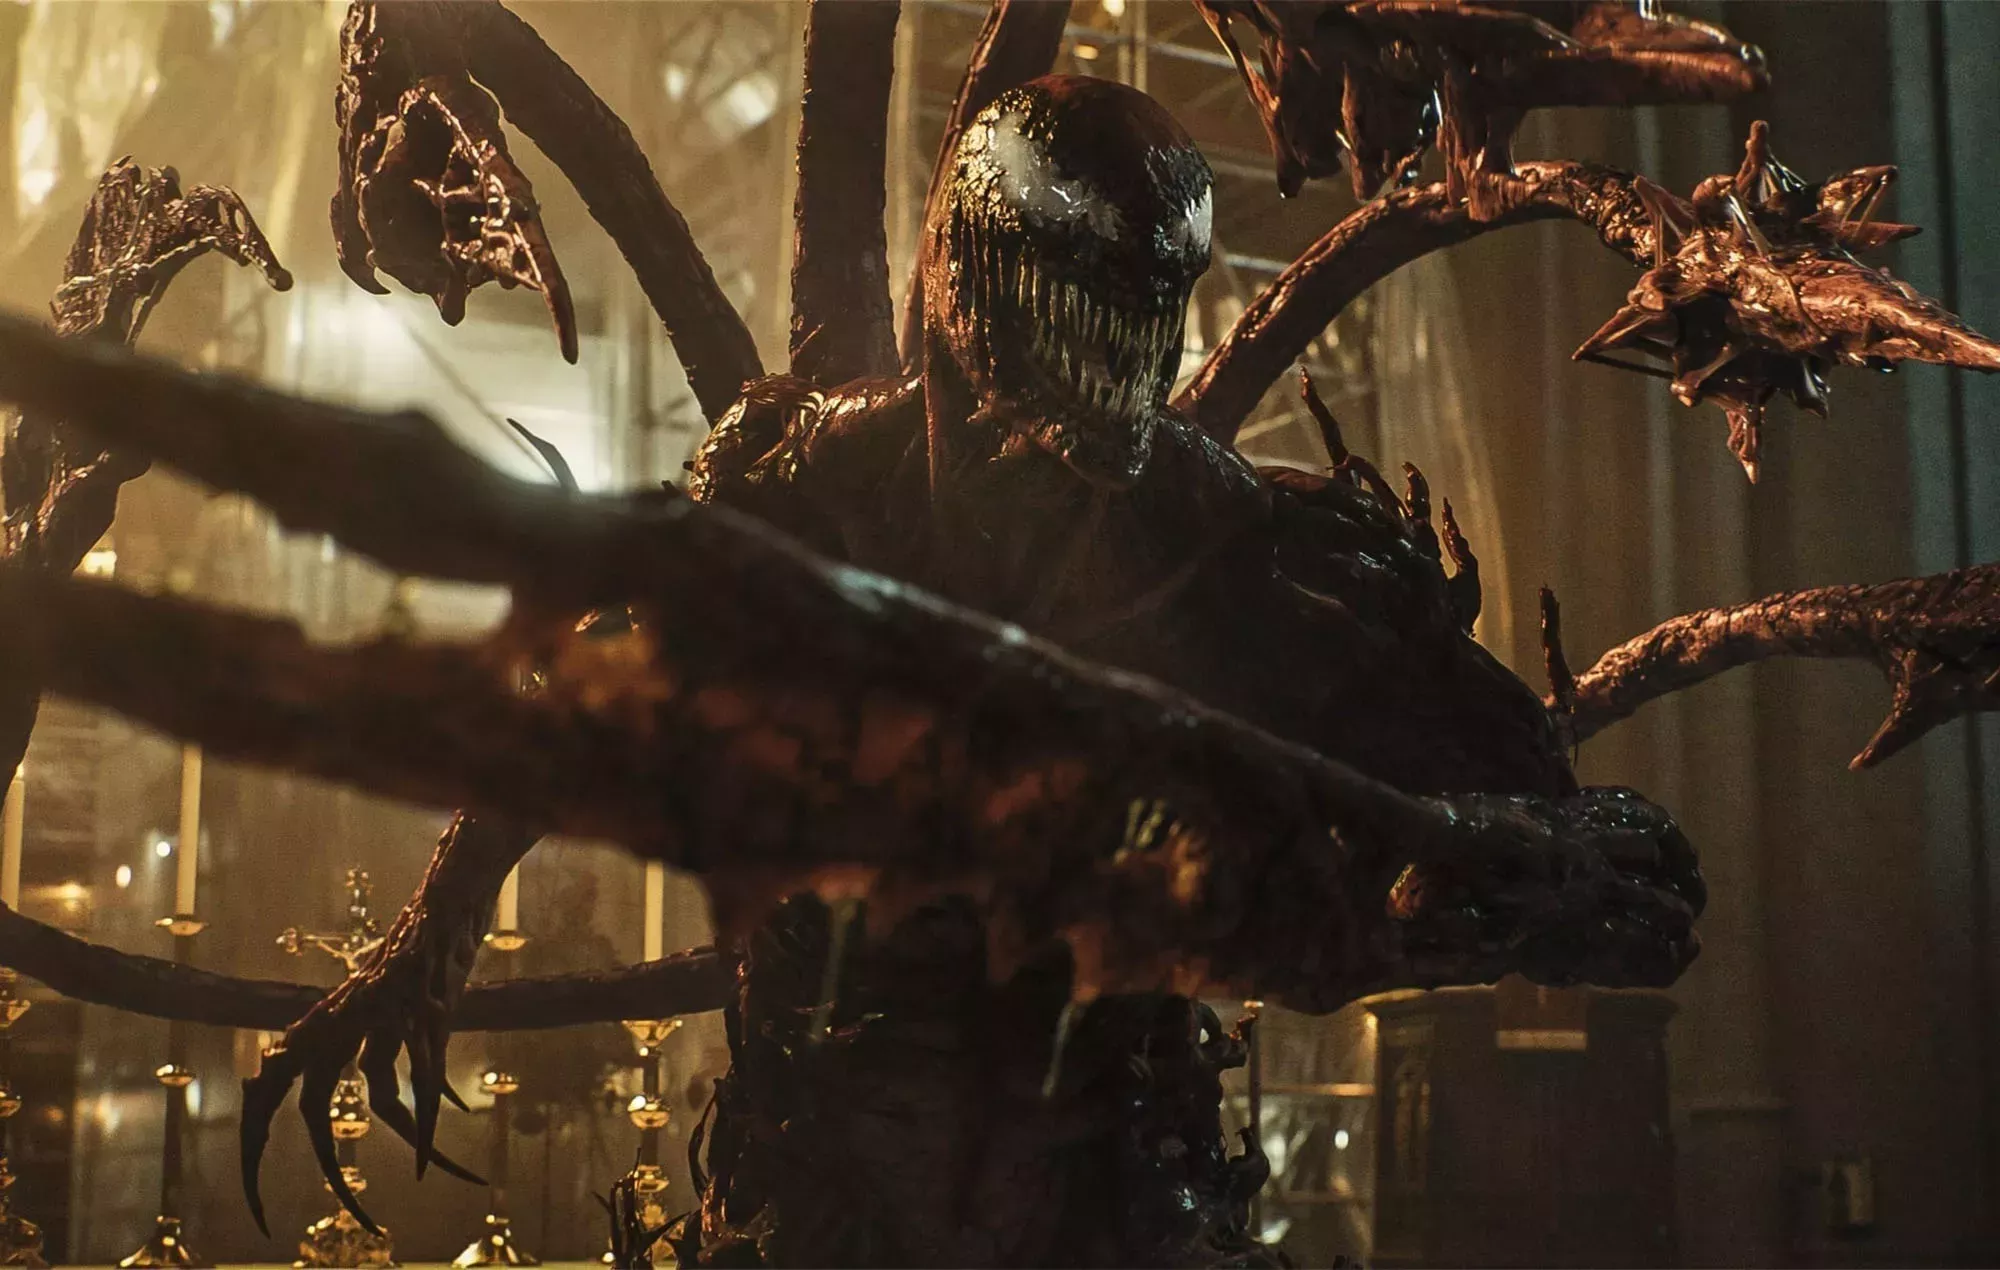 Venom 2' tuvo que "rebajar el tono" de la escena en la que un hombre muere  a golpes de lengua | Cultture